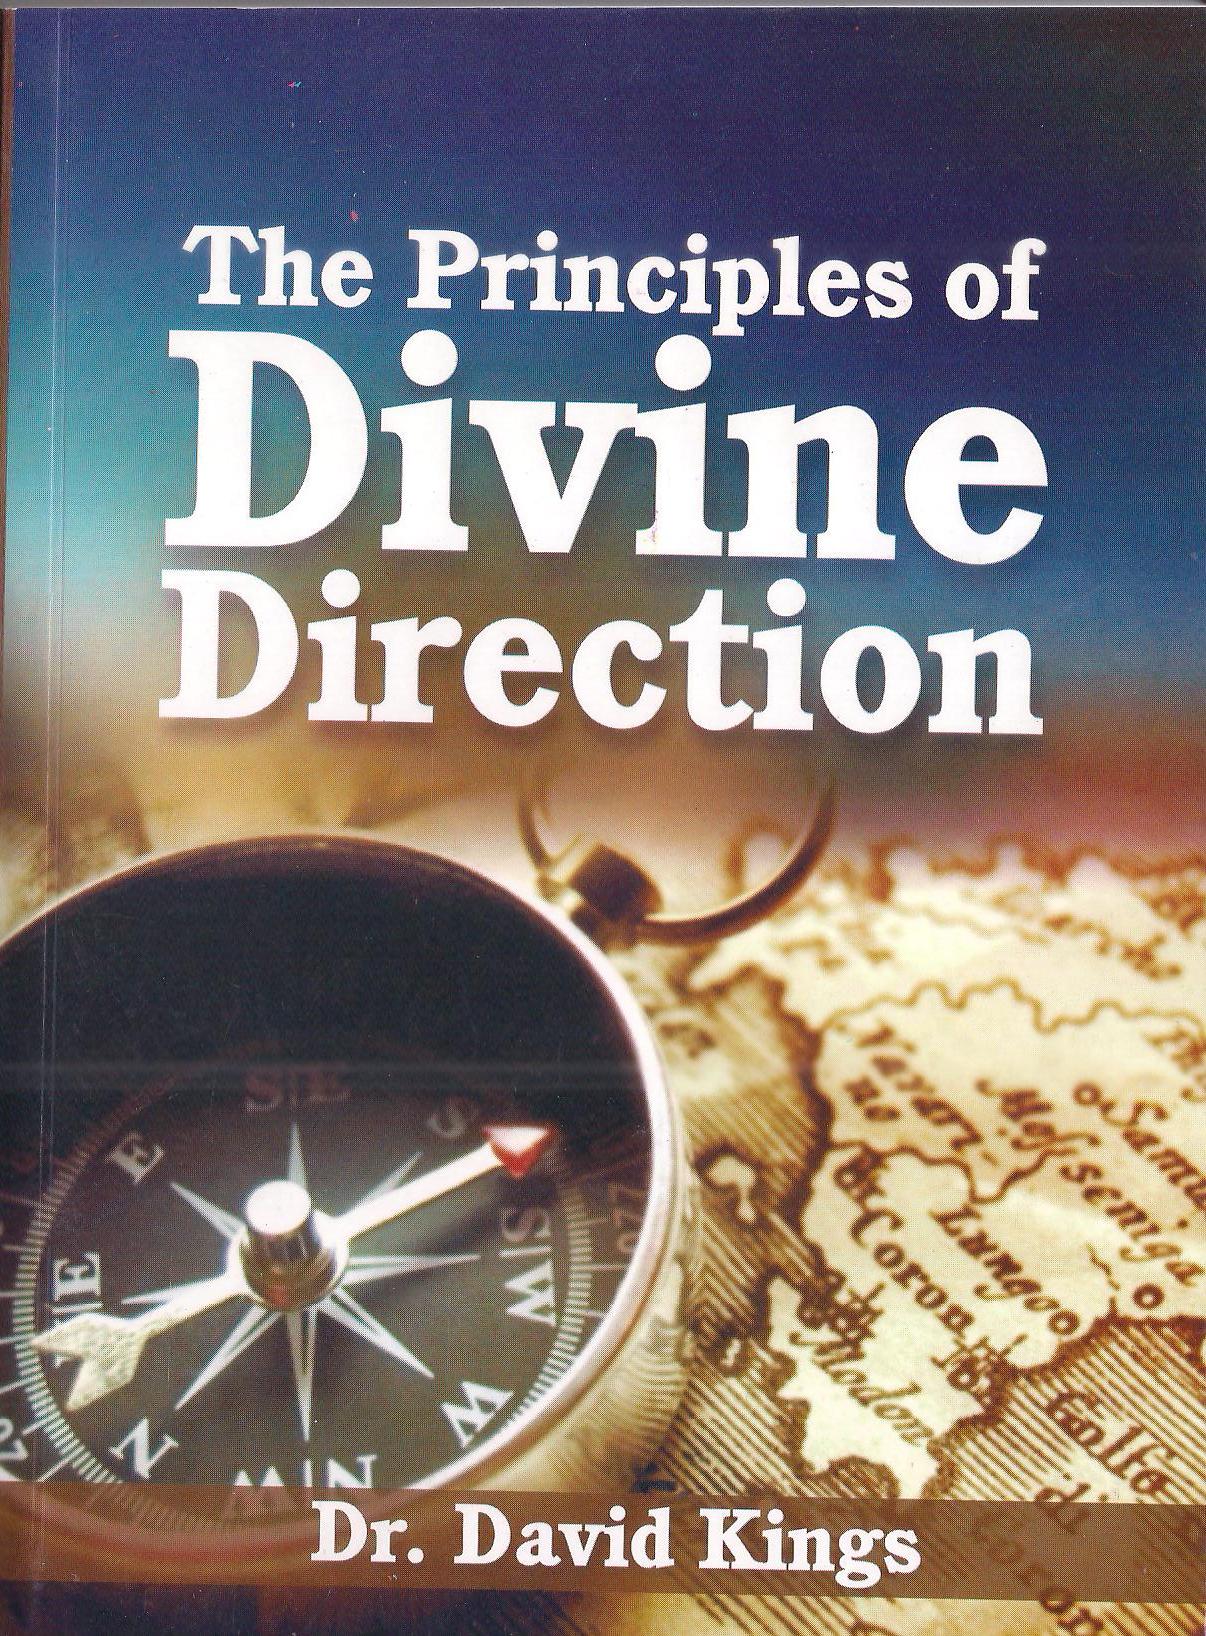 The Principles of Divine Dorection